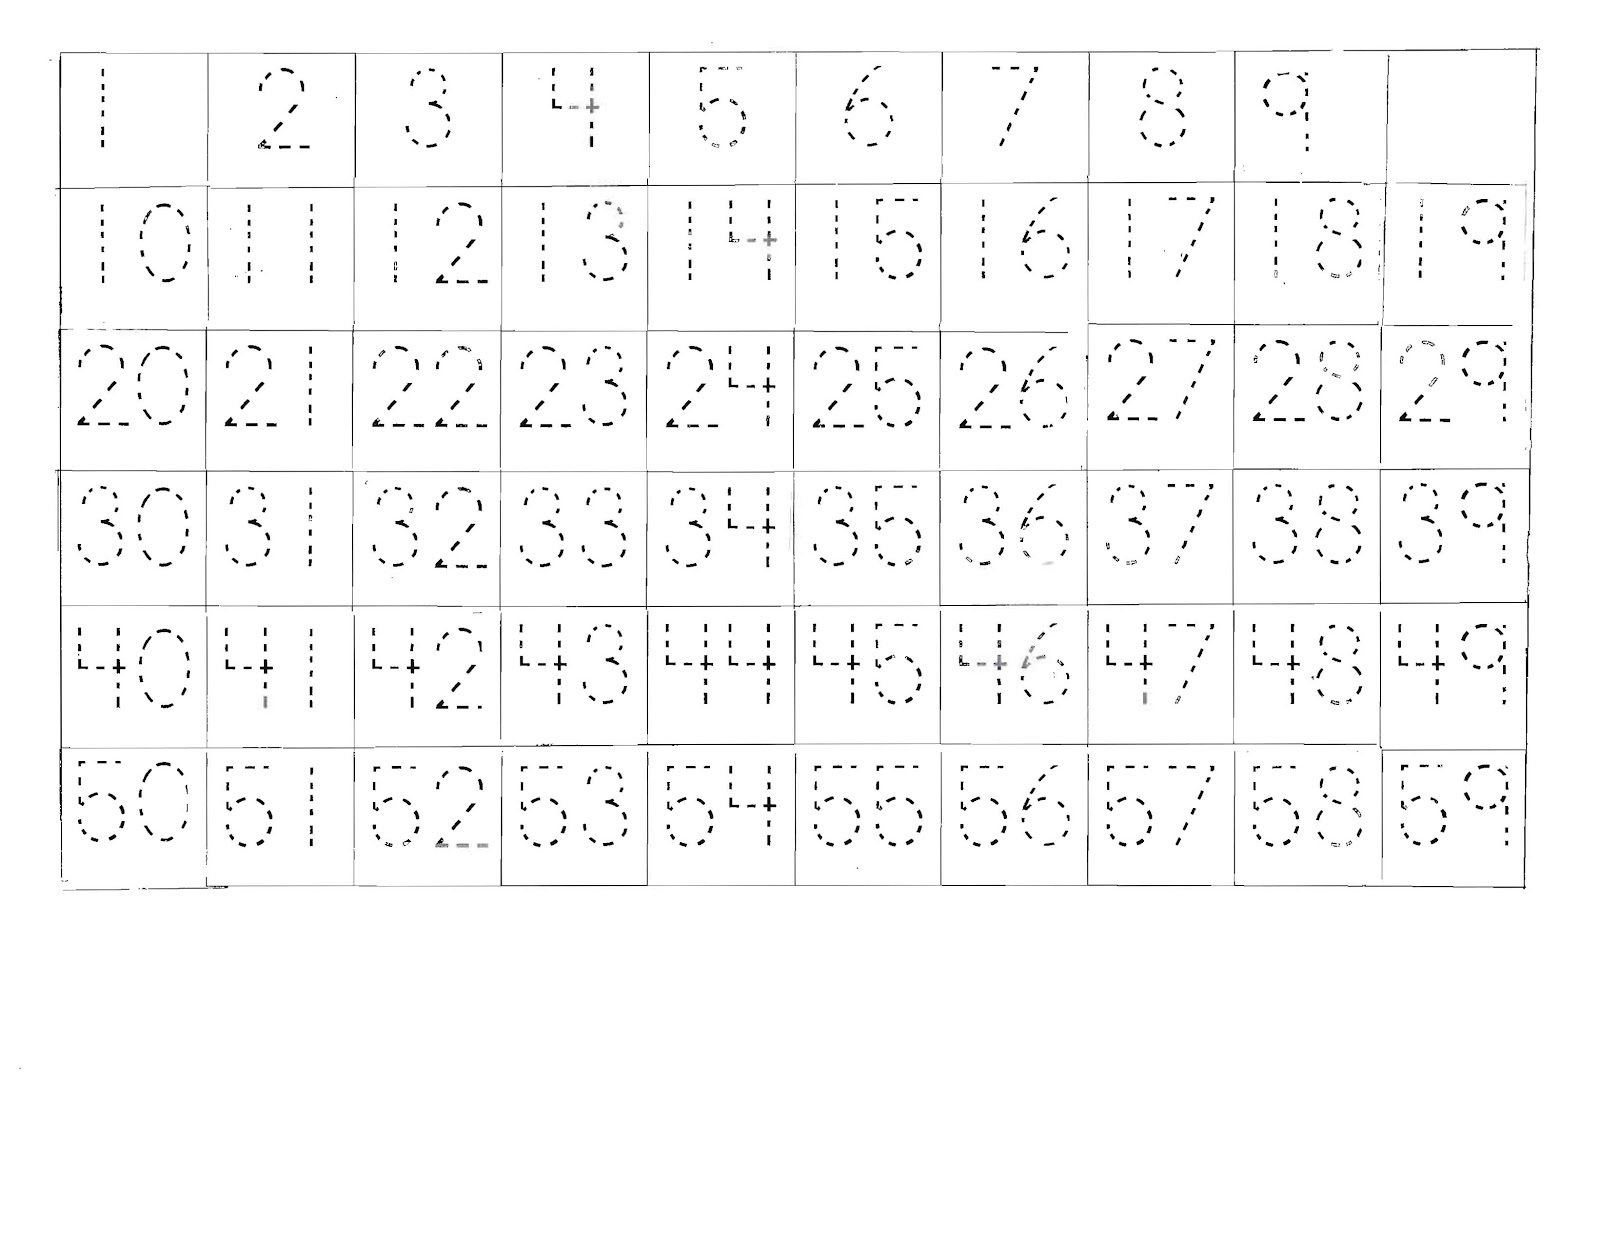 Printable Number Tracing Worksheets 1 100 Alphabetworksheetsfreecom 